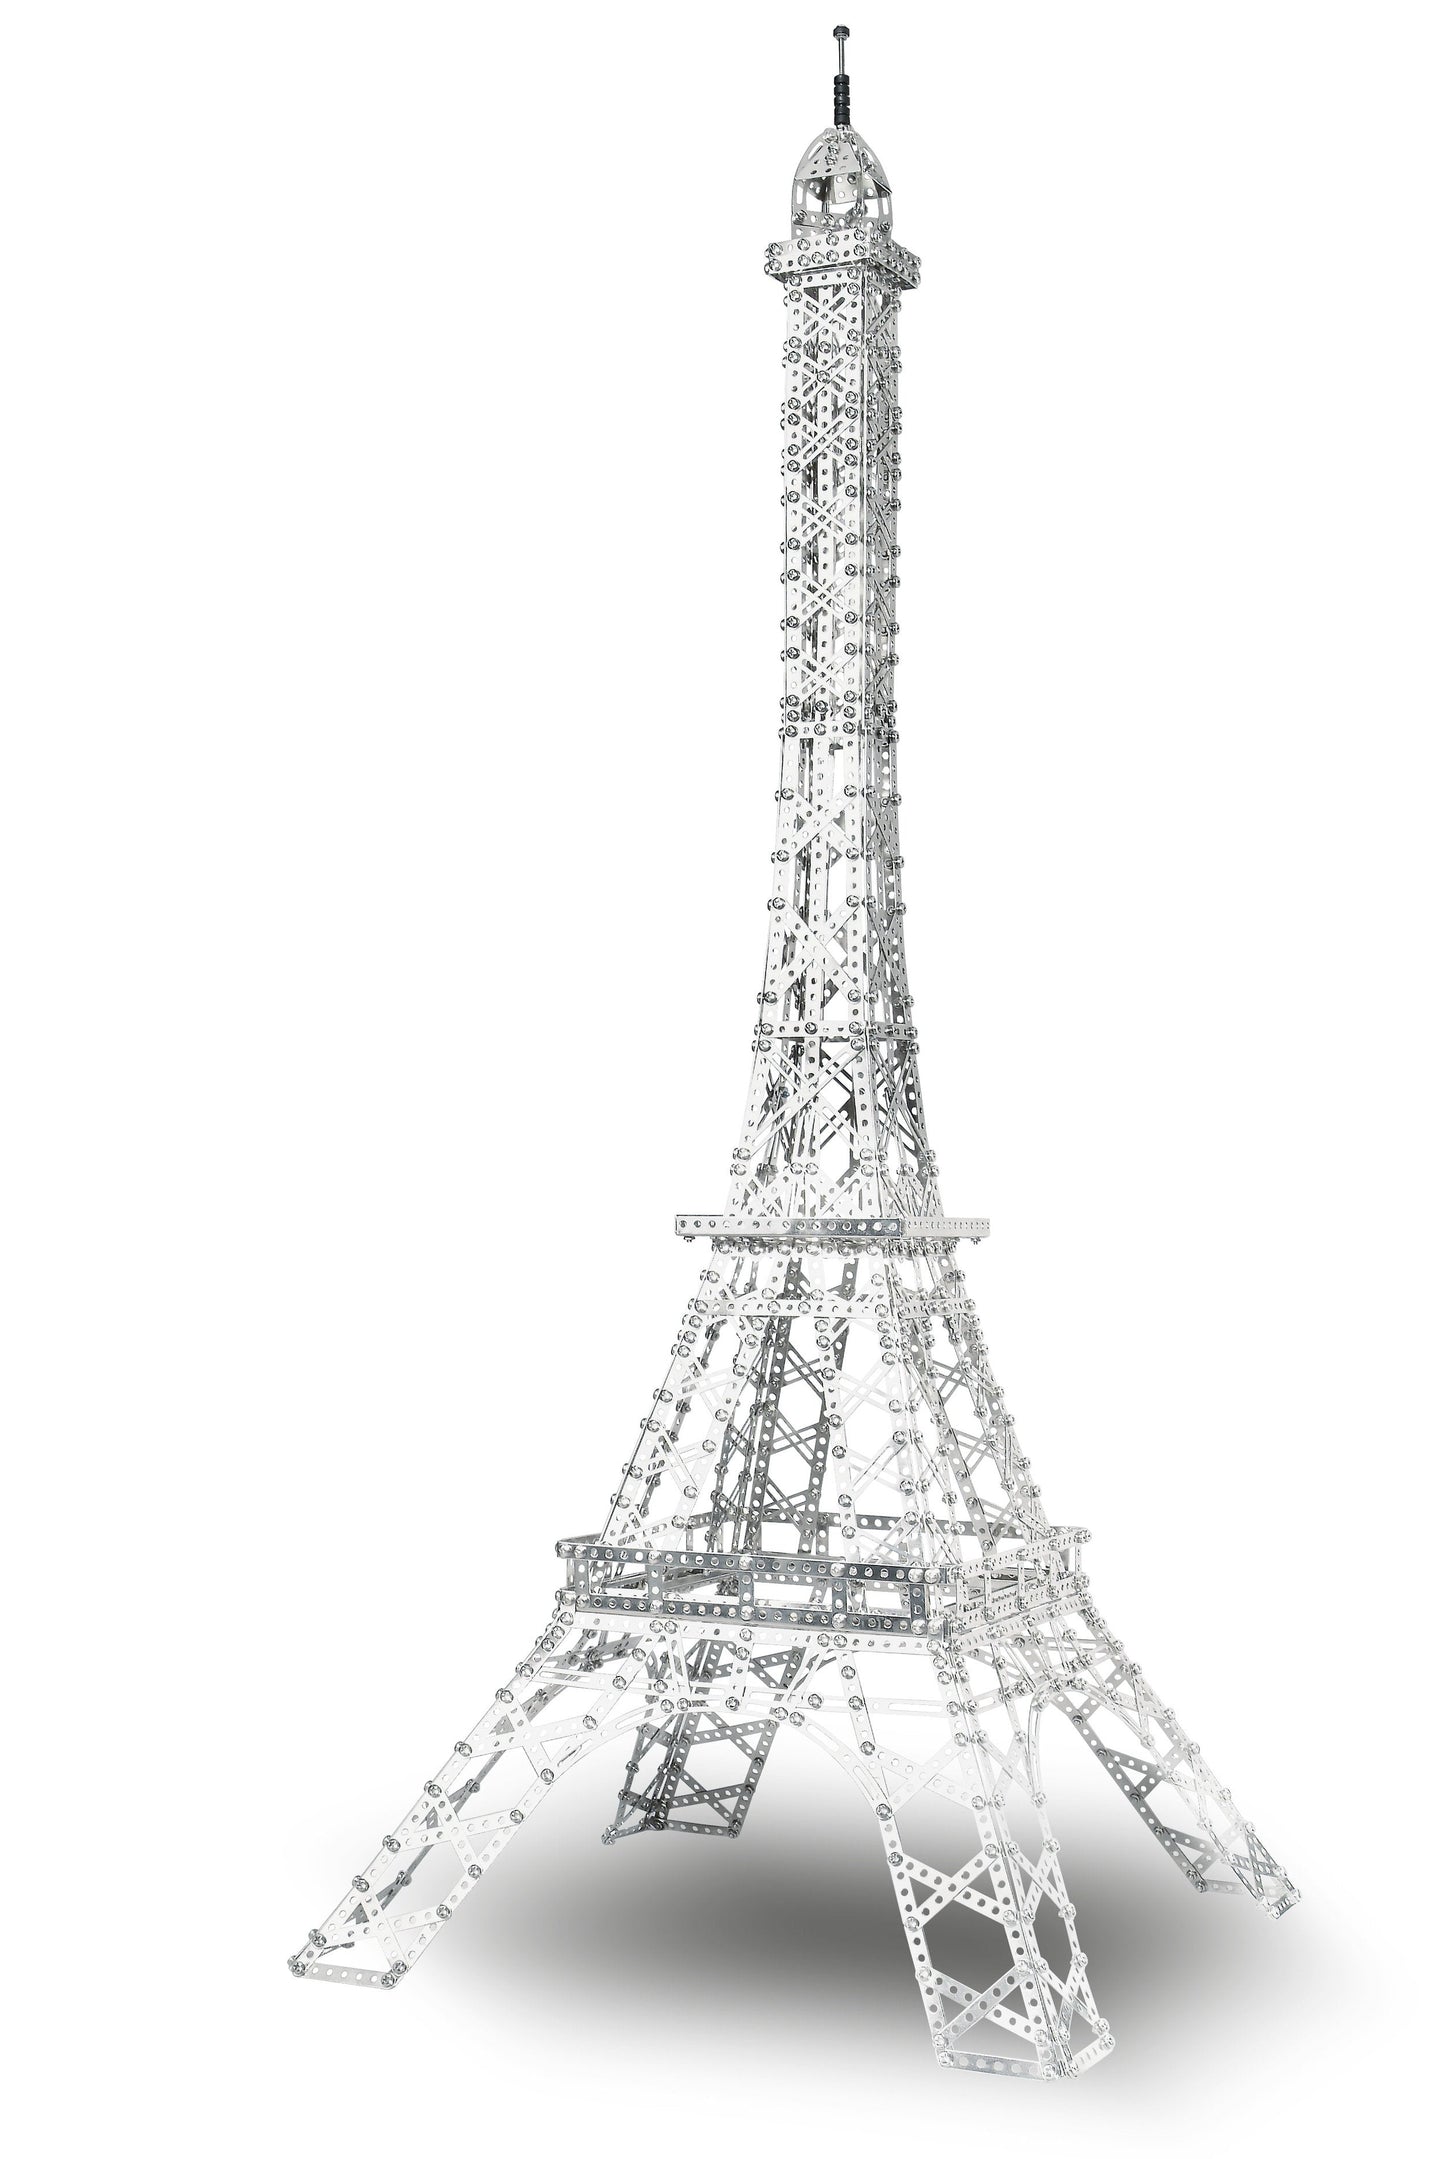 Eitech Landmark Series Deluxe Eiffel Tower